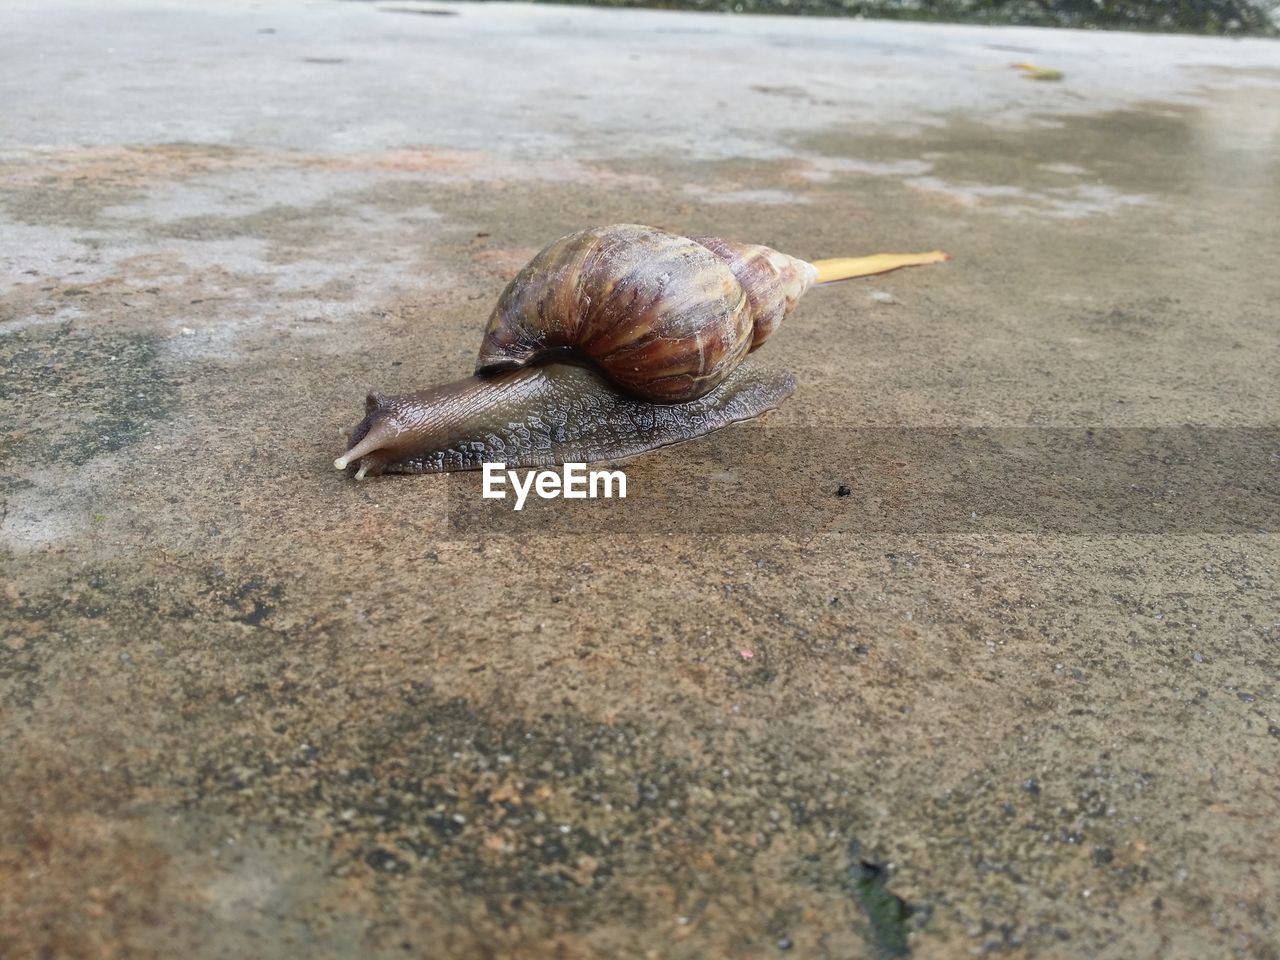 Snail on footpath